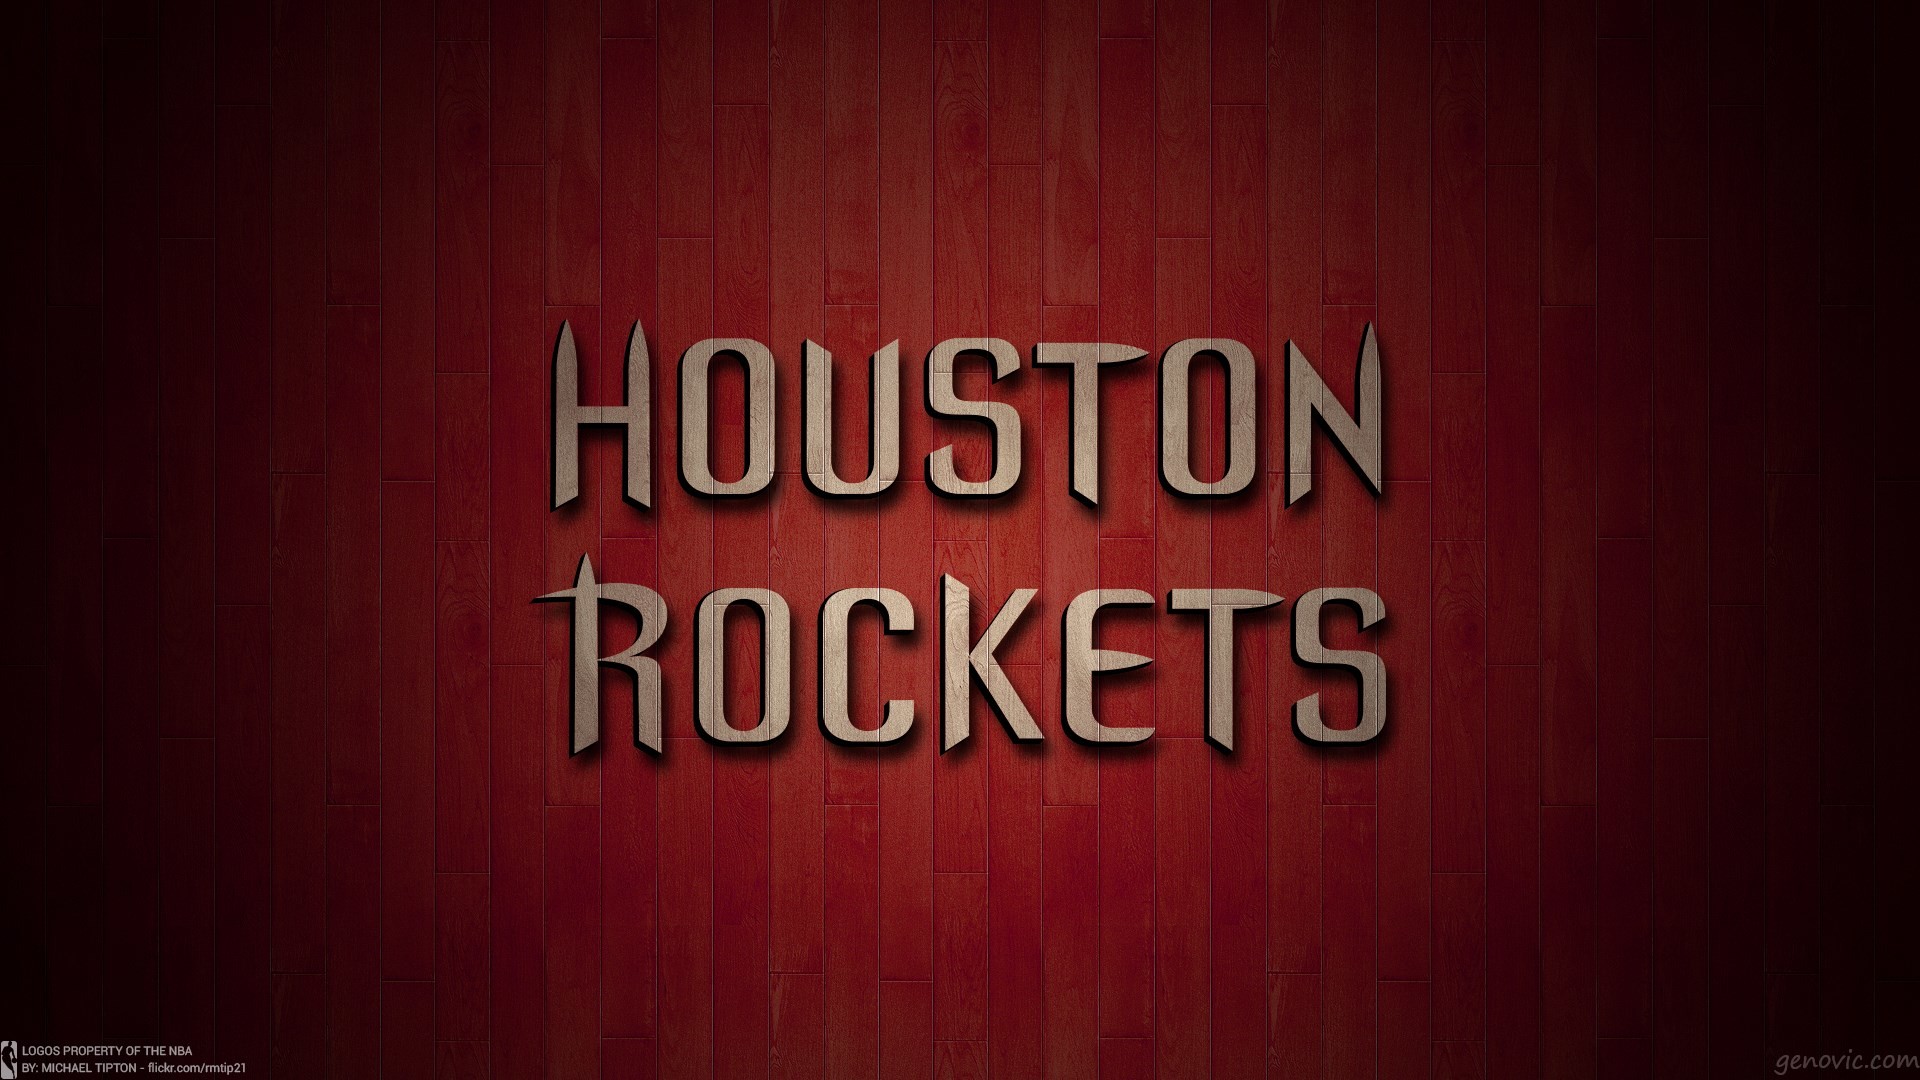 Rockets Wallpaper Houston Rockets Images Wallpapers Pinterest Wallpaper